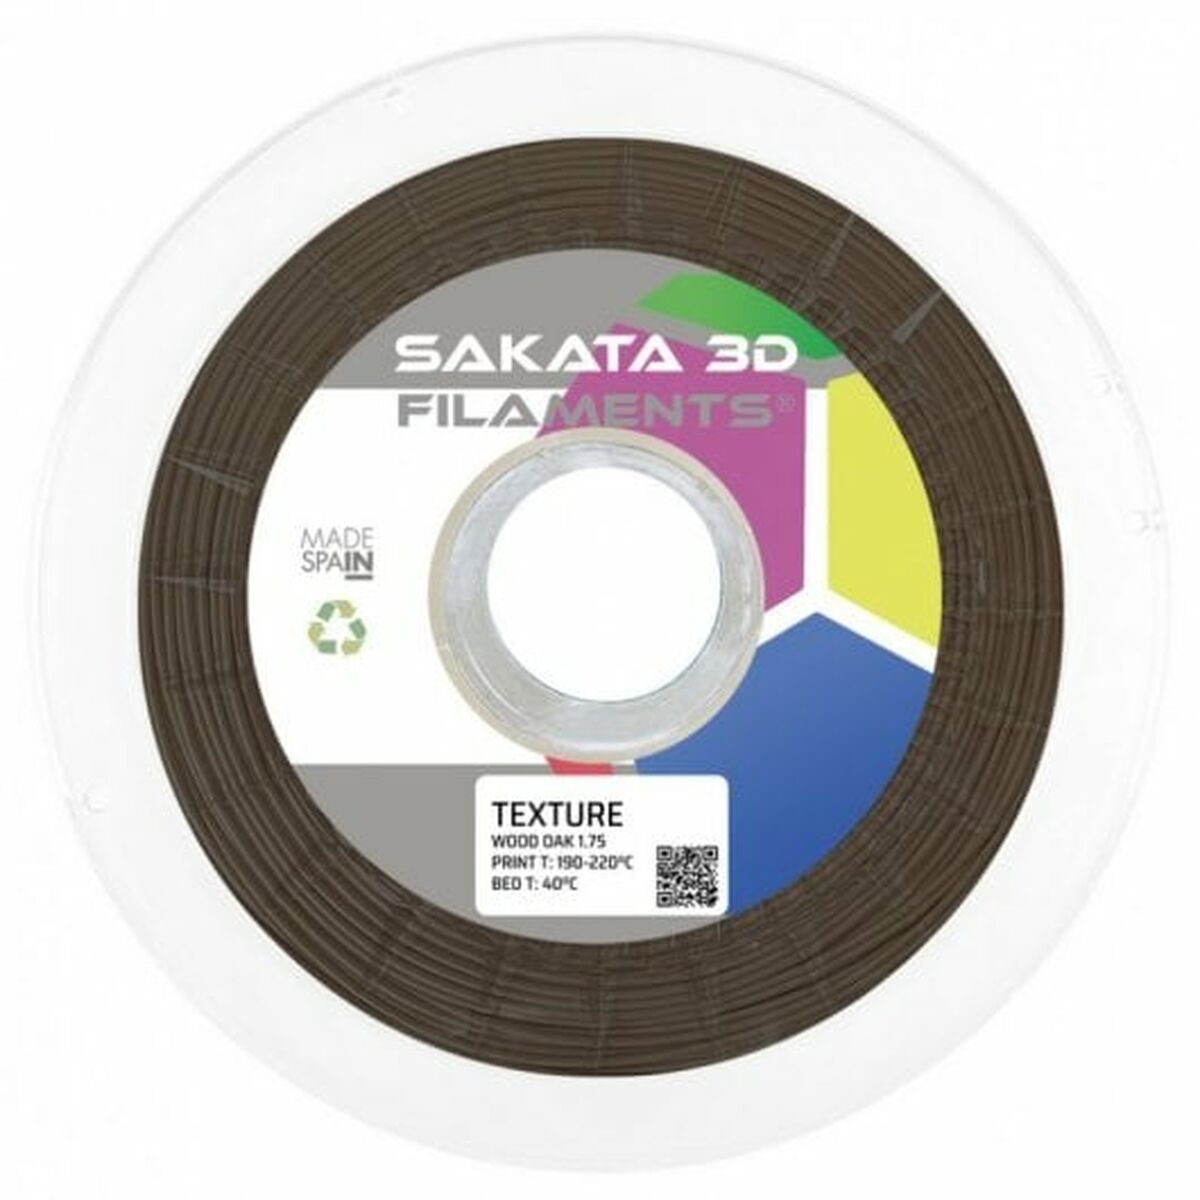 Filament Reel Sakata 3D 10417657 PLA TEXTURE Ø 1,75 mm Brown